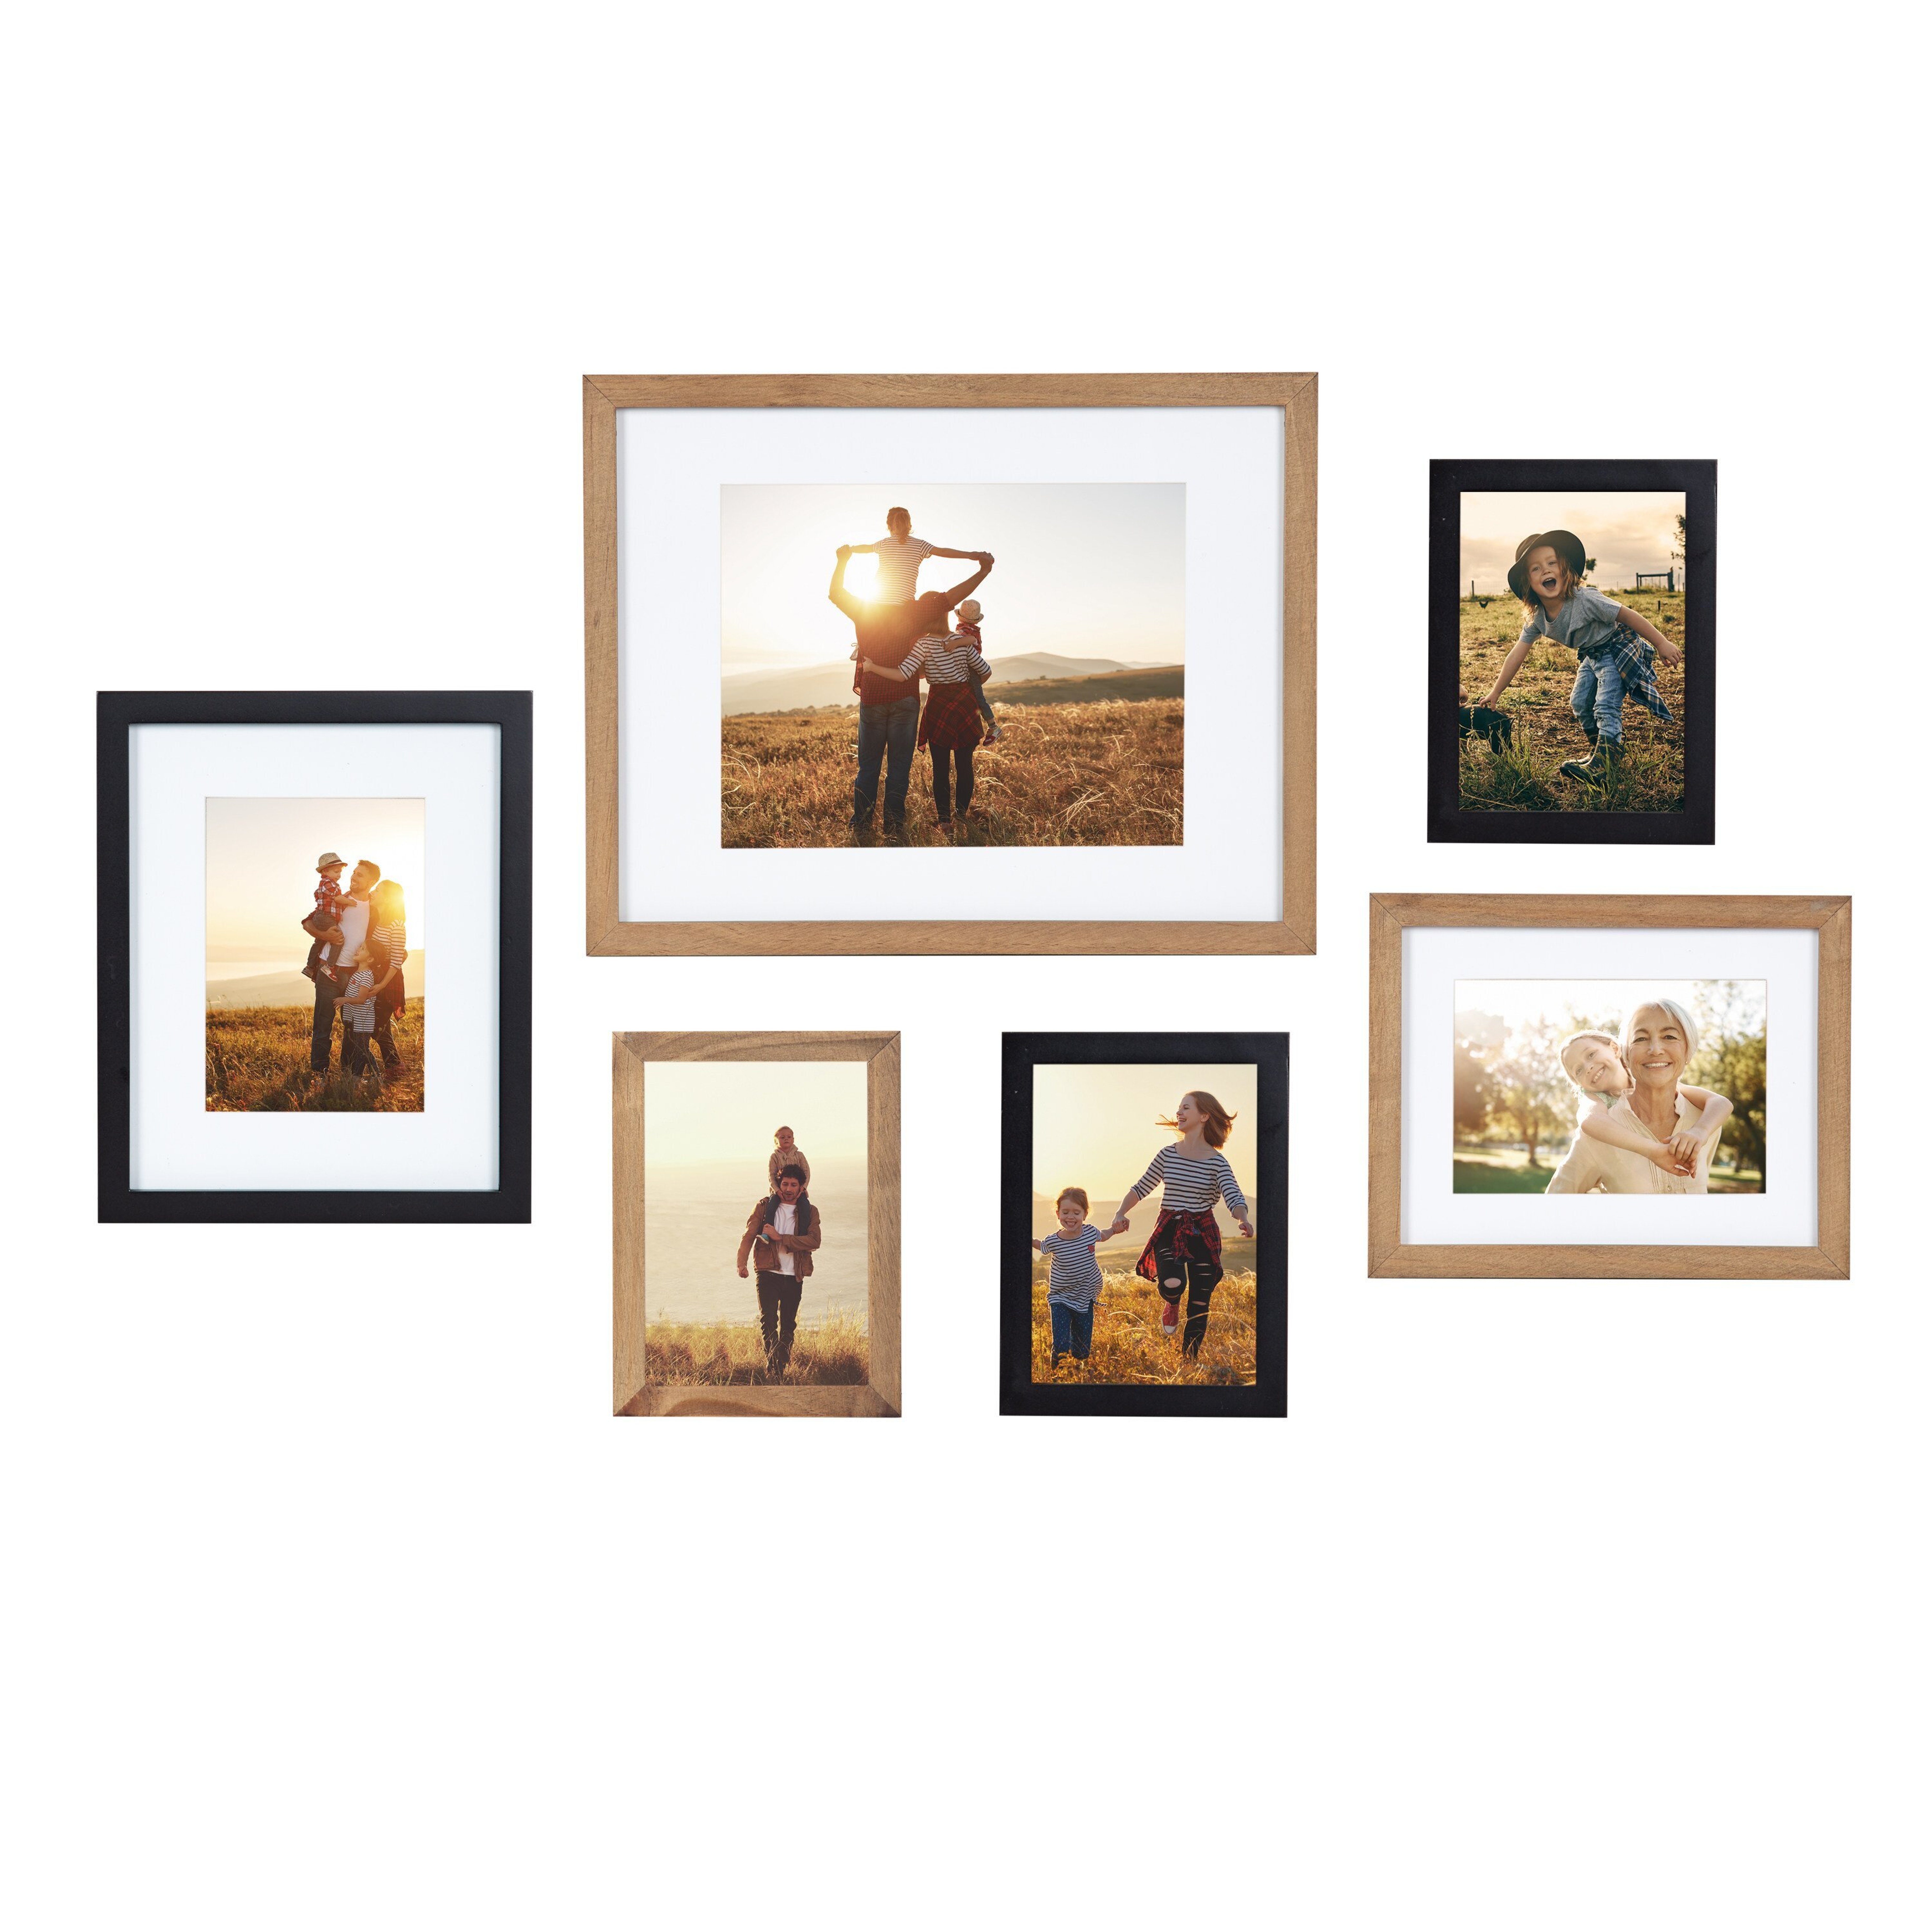 6 Piece Jakasia Gallery Wall Picture Frame Set - Wayfair